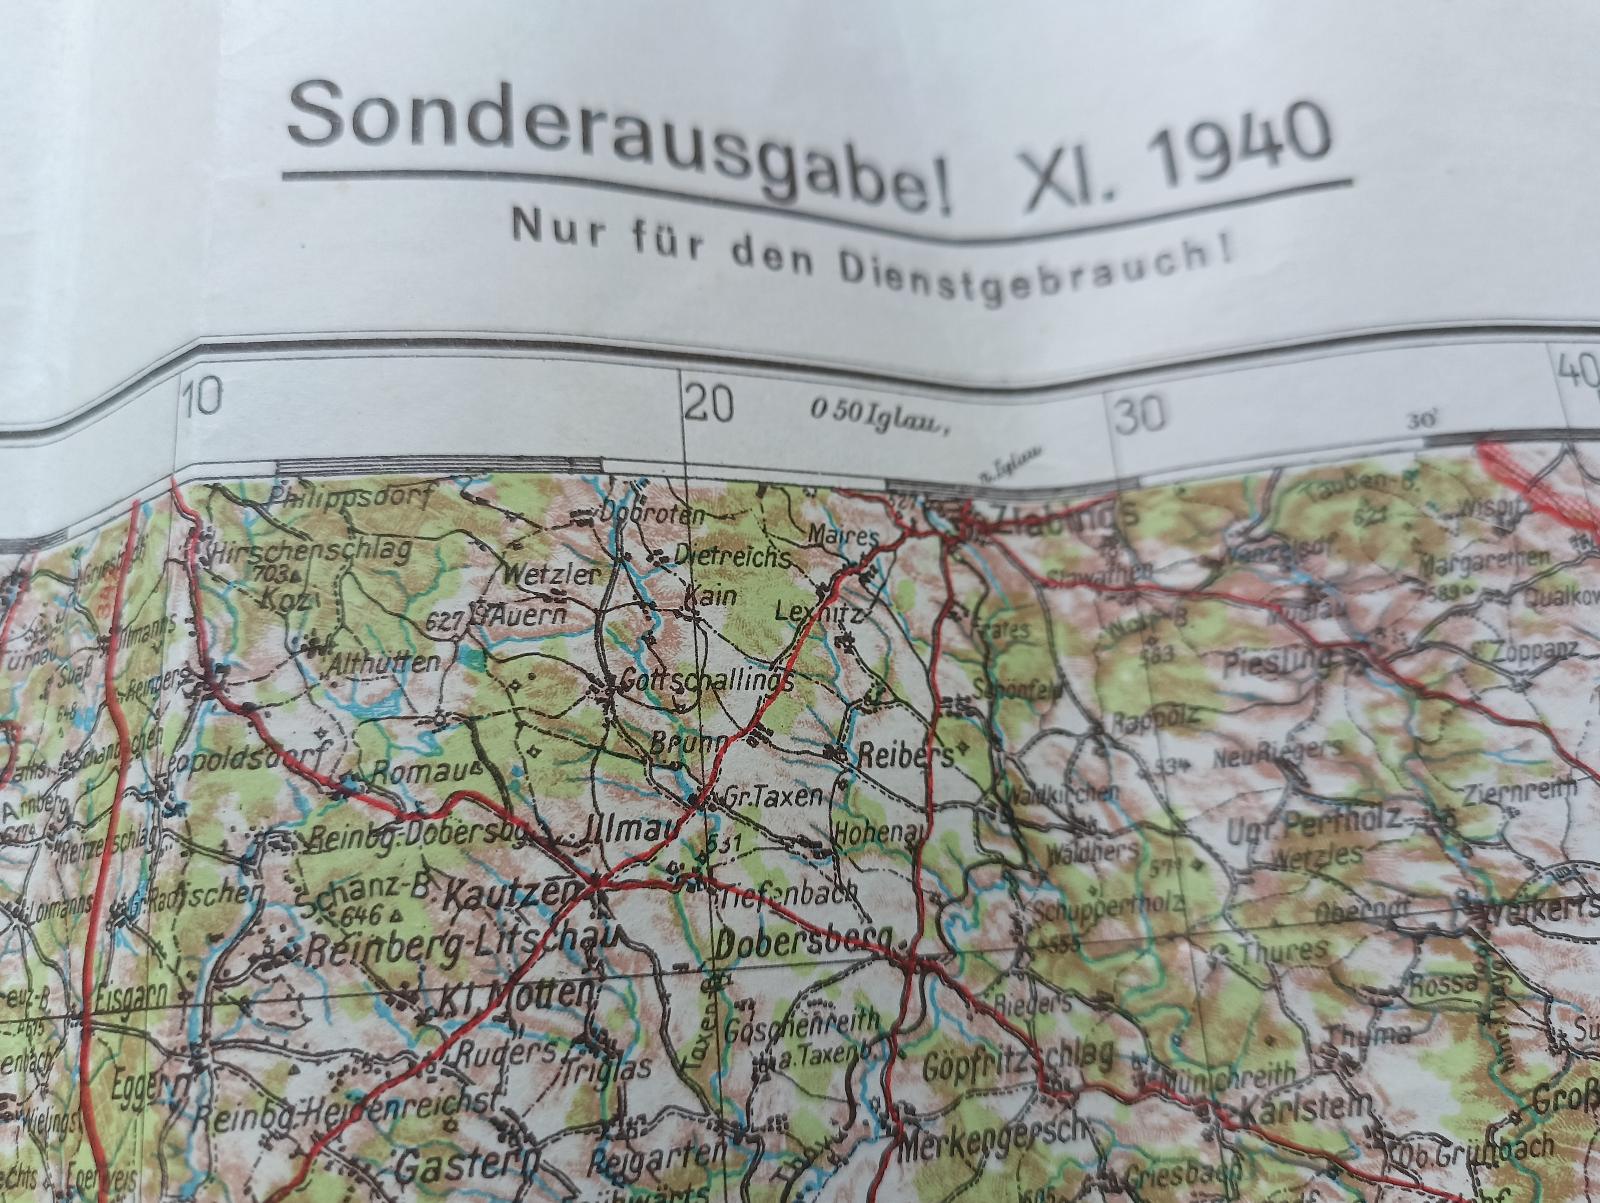 Protektorát Budweis Znojmo Kaplnka Zwettl Eggenburg Krems Raabs 1940 - Staré mapy a veduty